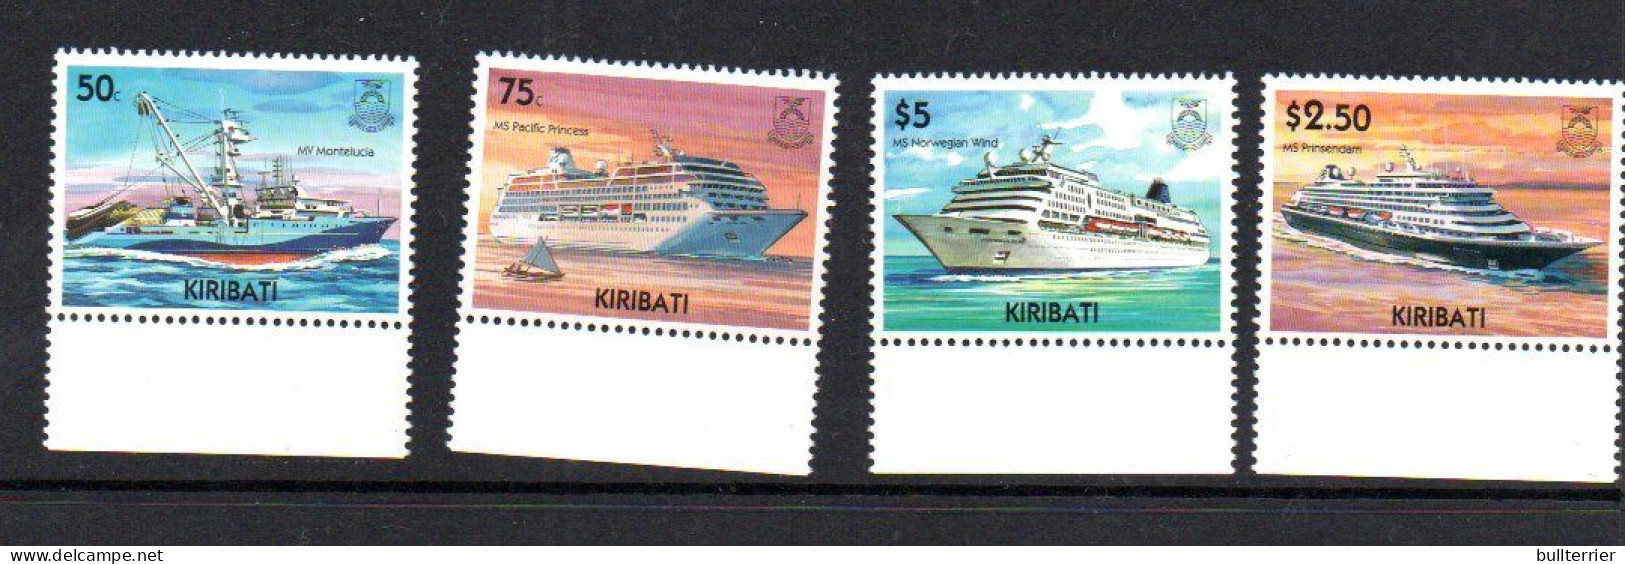 KIRIBATI - 2004  - MERCHANT SHIPS SET OF 4  MINT NEVER HINGED SG CAT £13 - Kiribati (1979-...)